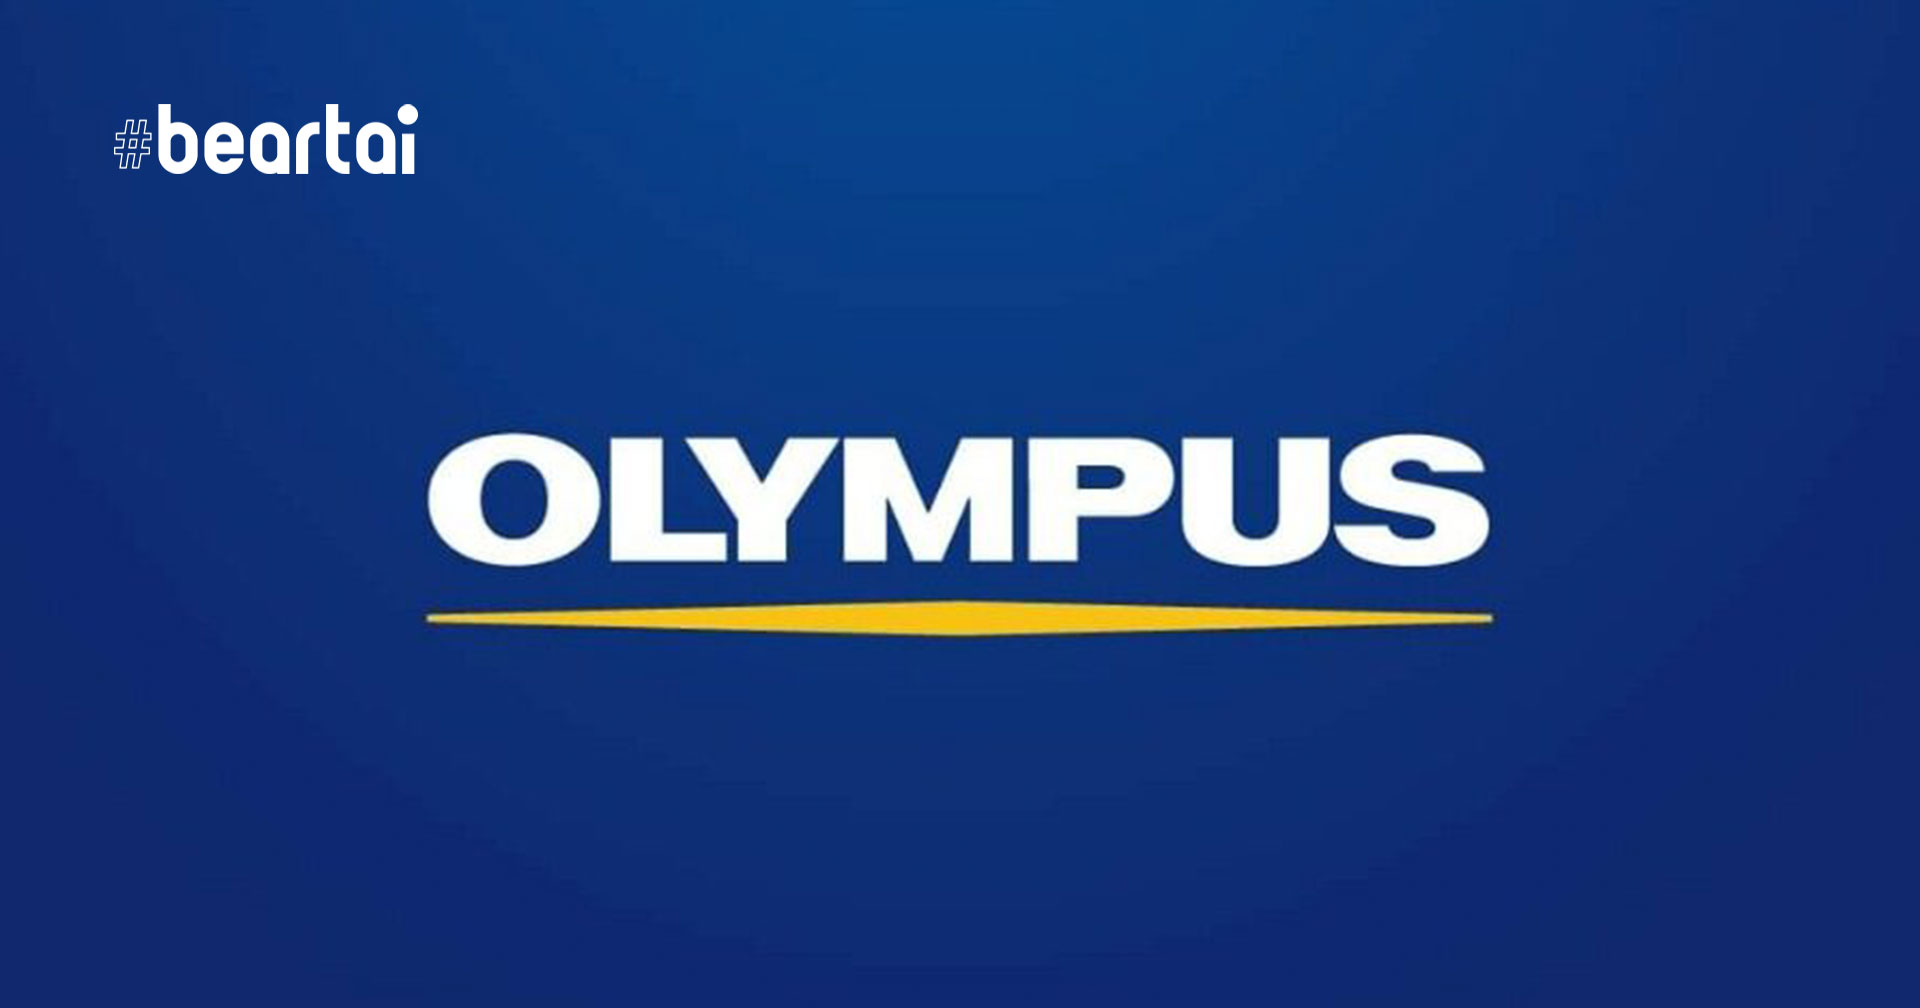 Olympus ประกาศปิดให้บริการร้านค้าออนไลน์ ตั้งแต่วันที่ 9 พฤศจิกายน 2563 เป็นต้นไป